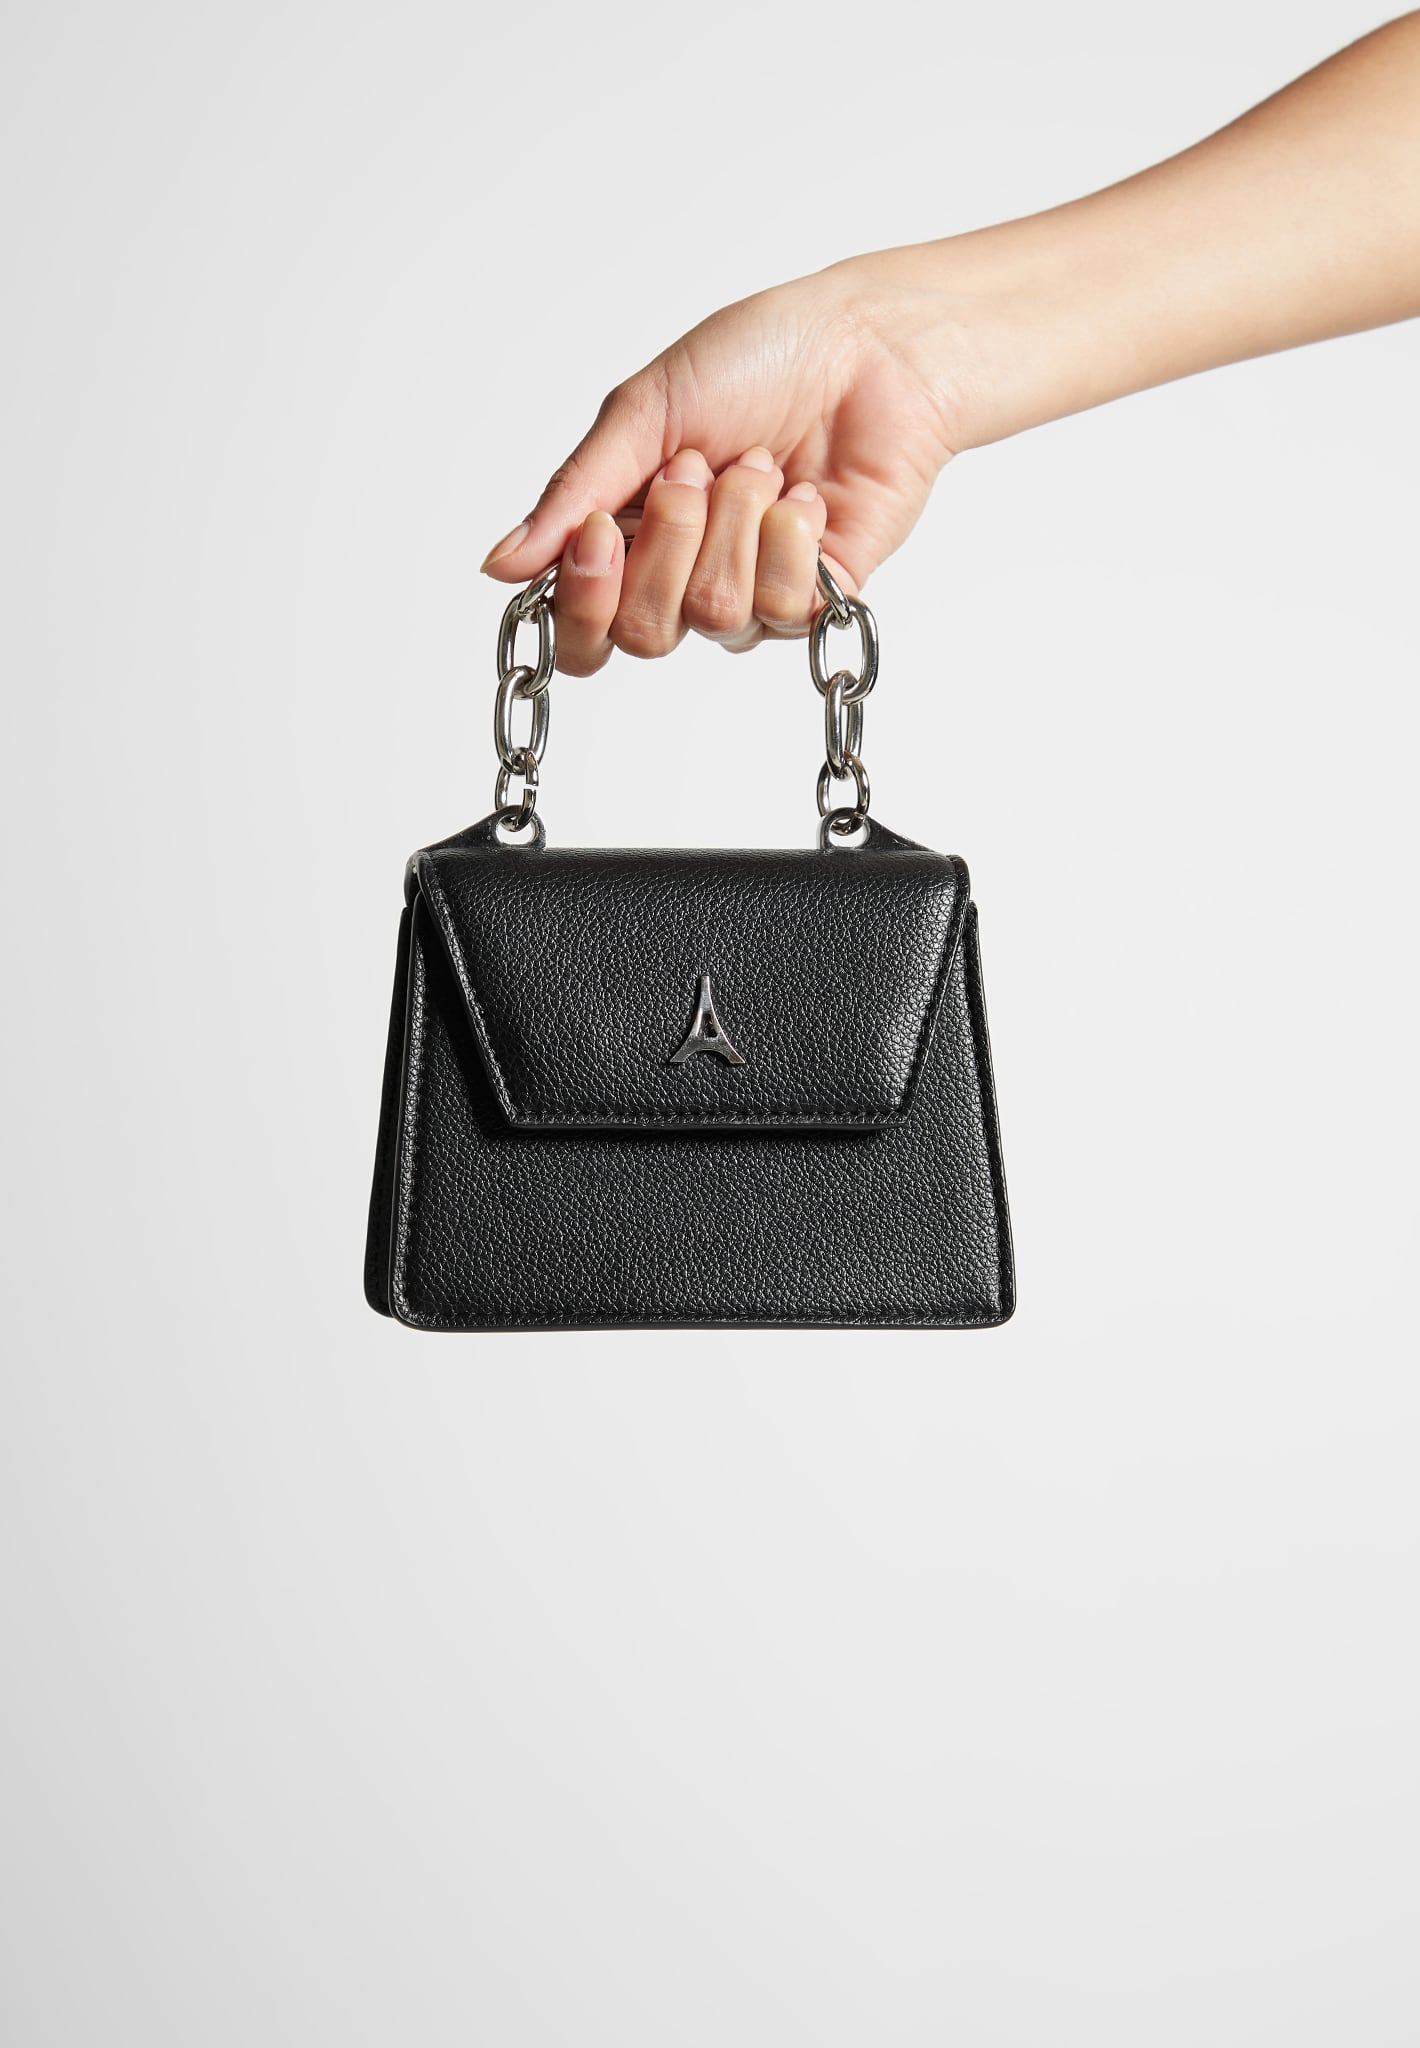 miniature-bag-black-1